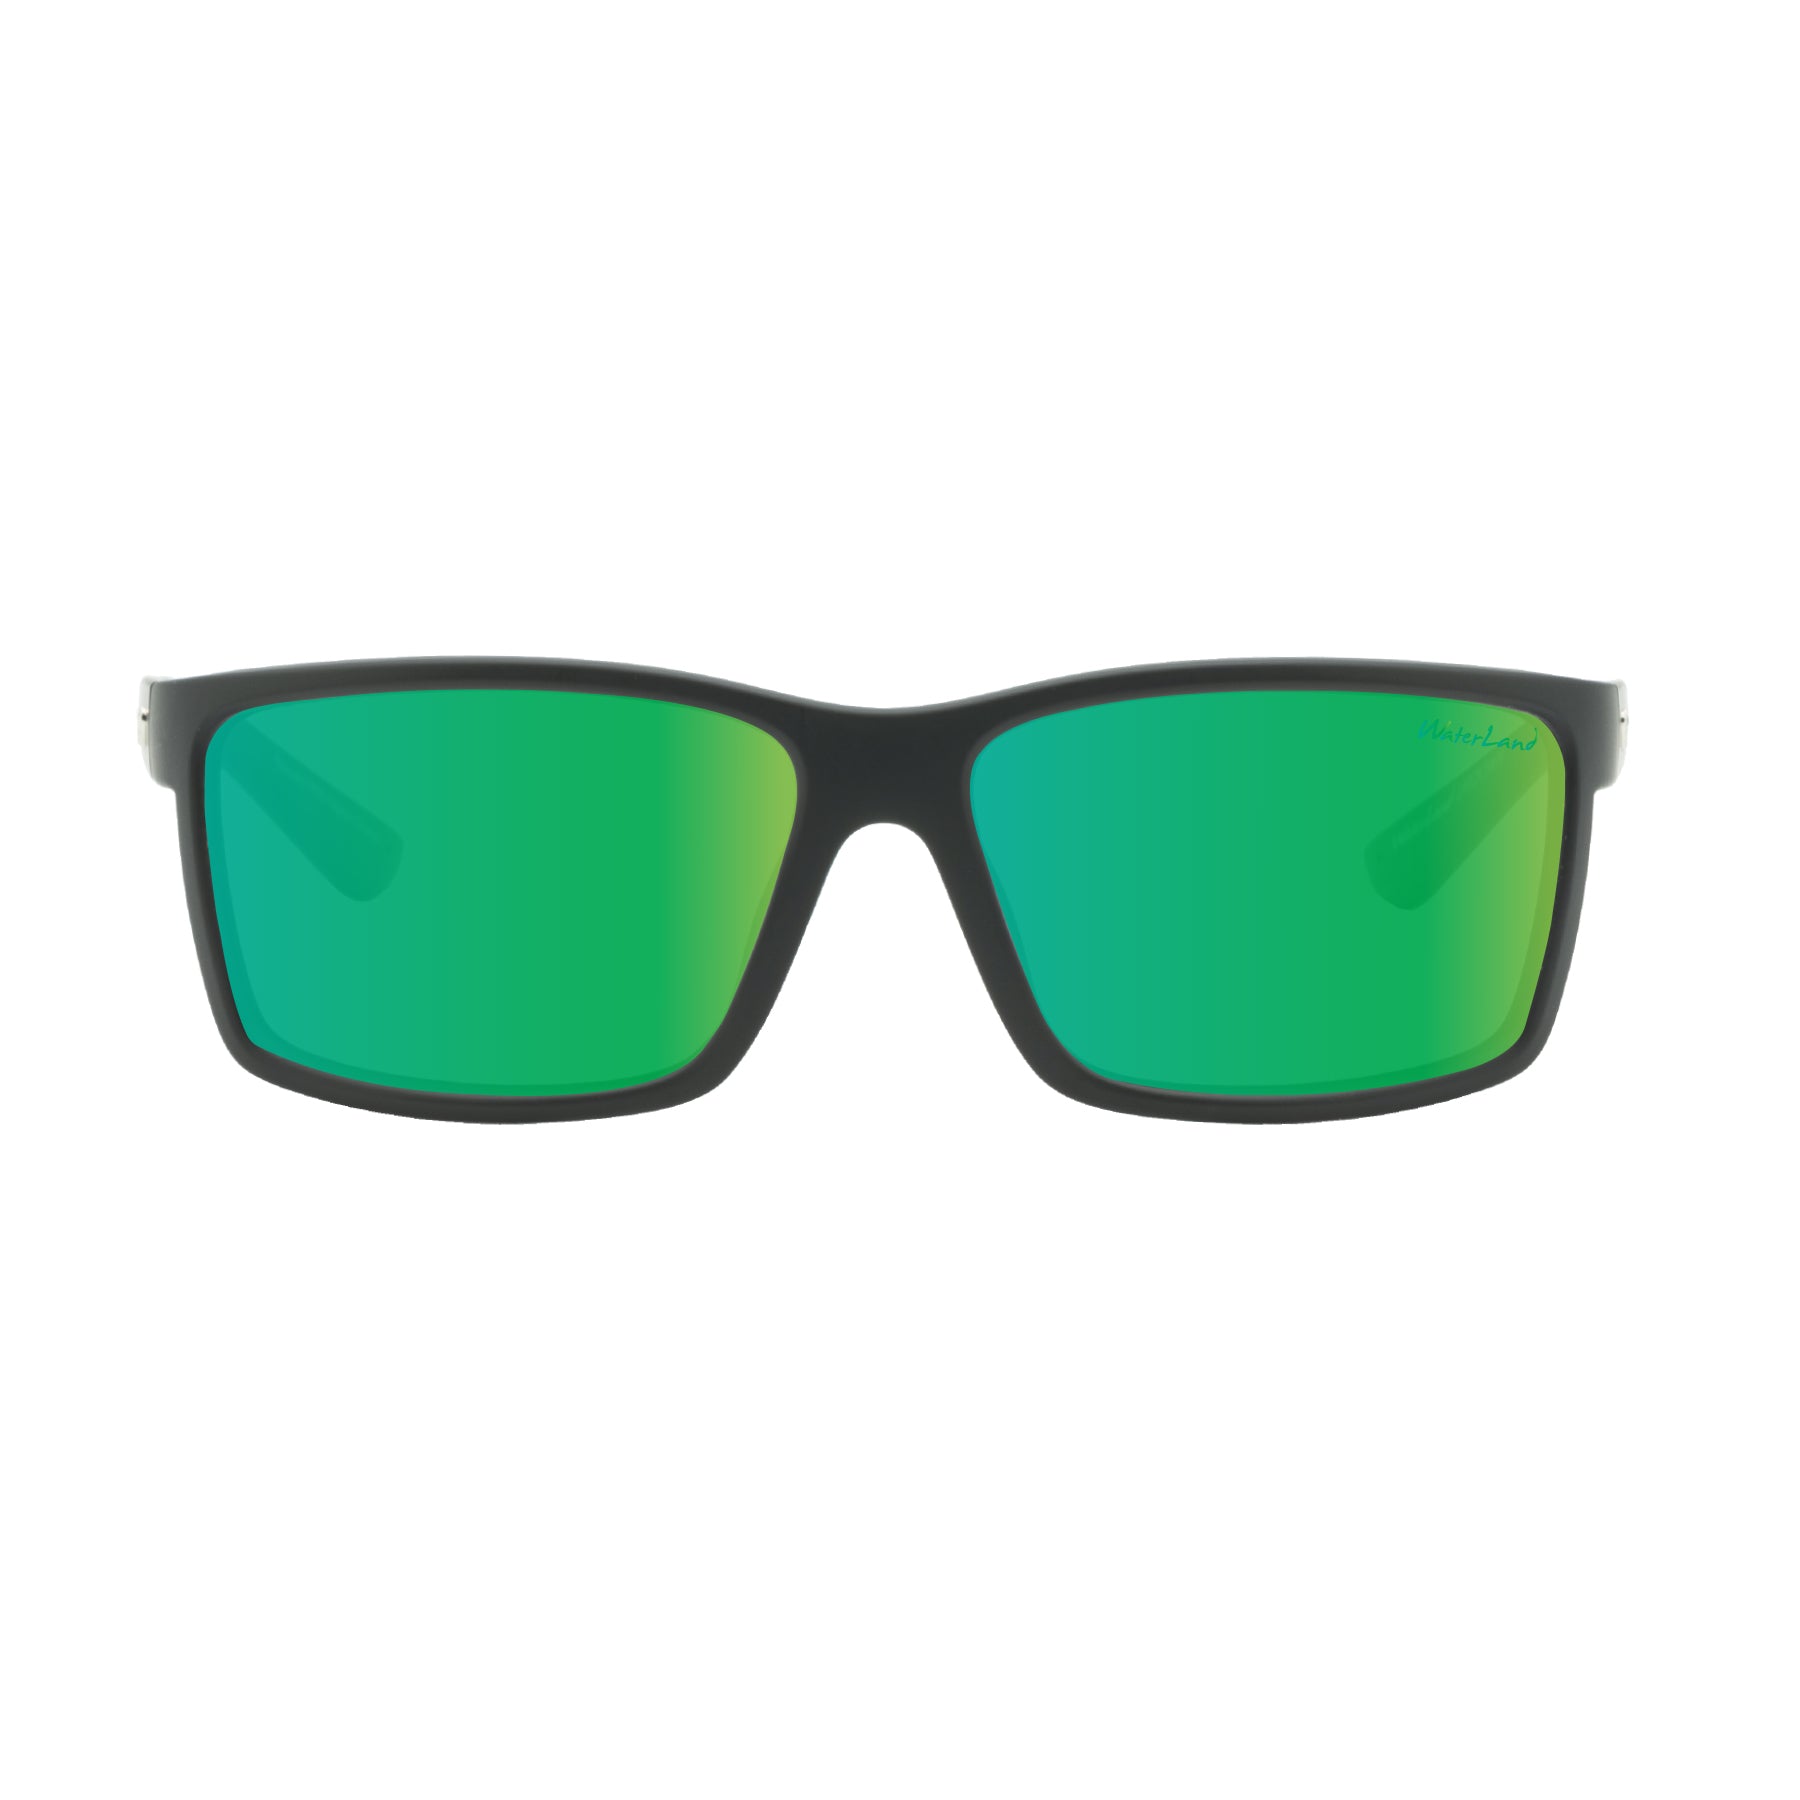 Waterland Co Sunglasses Laydown Black Green Mirror